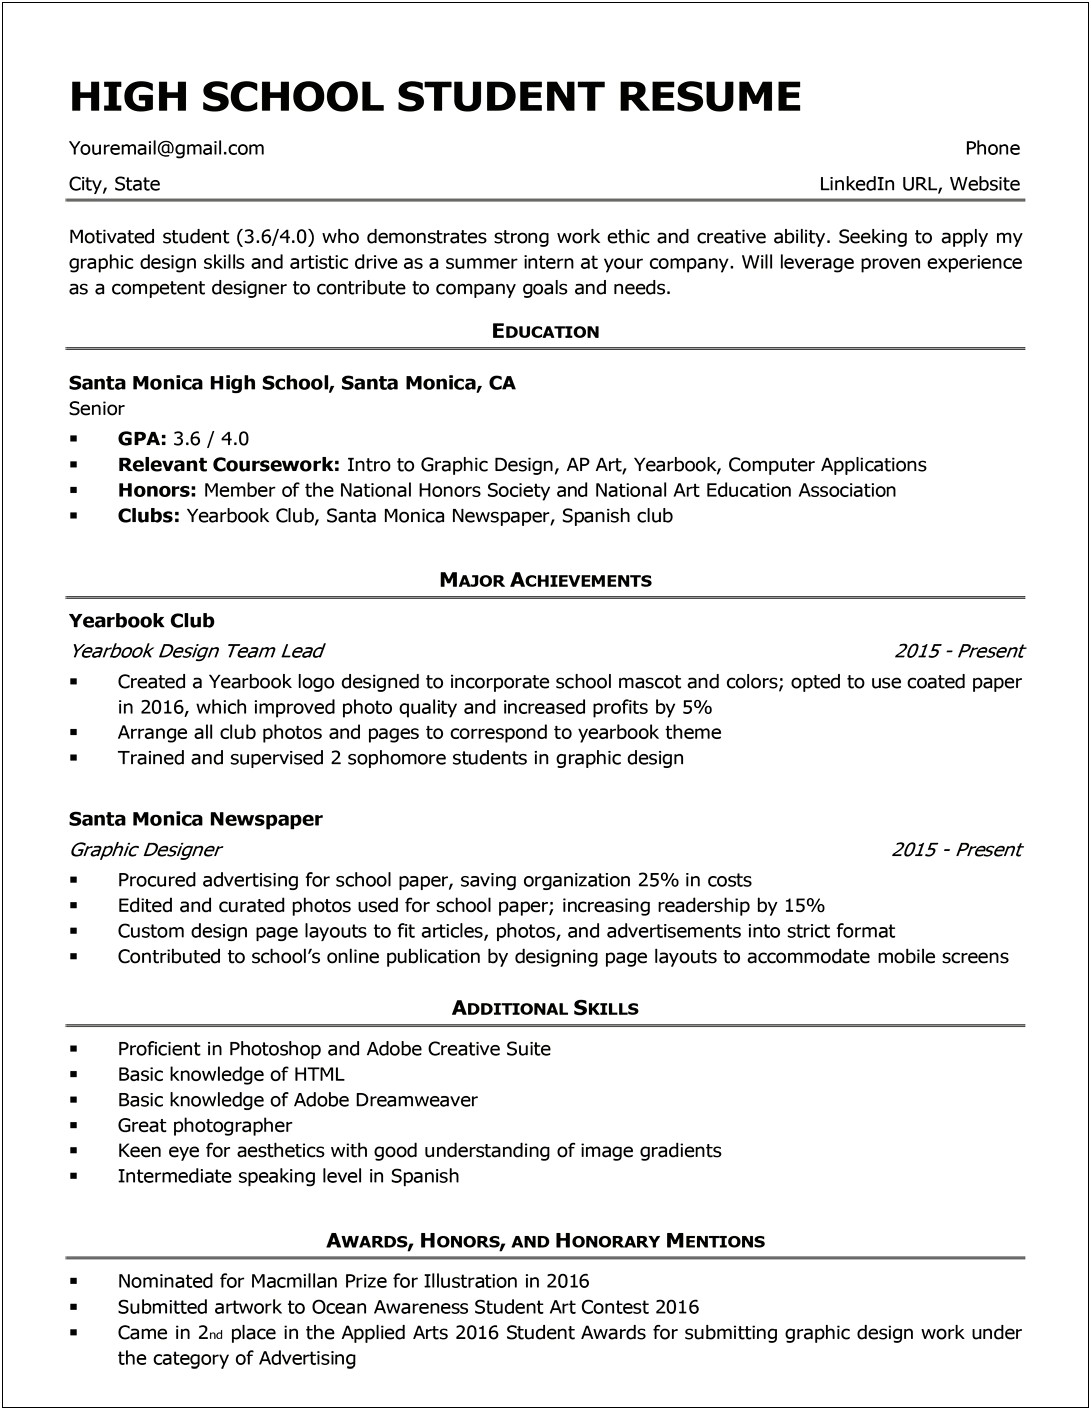 Sample Resume High School First Job